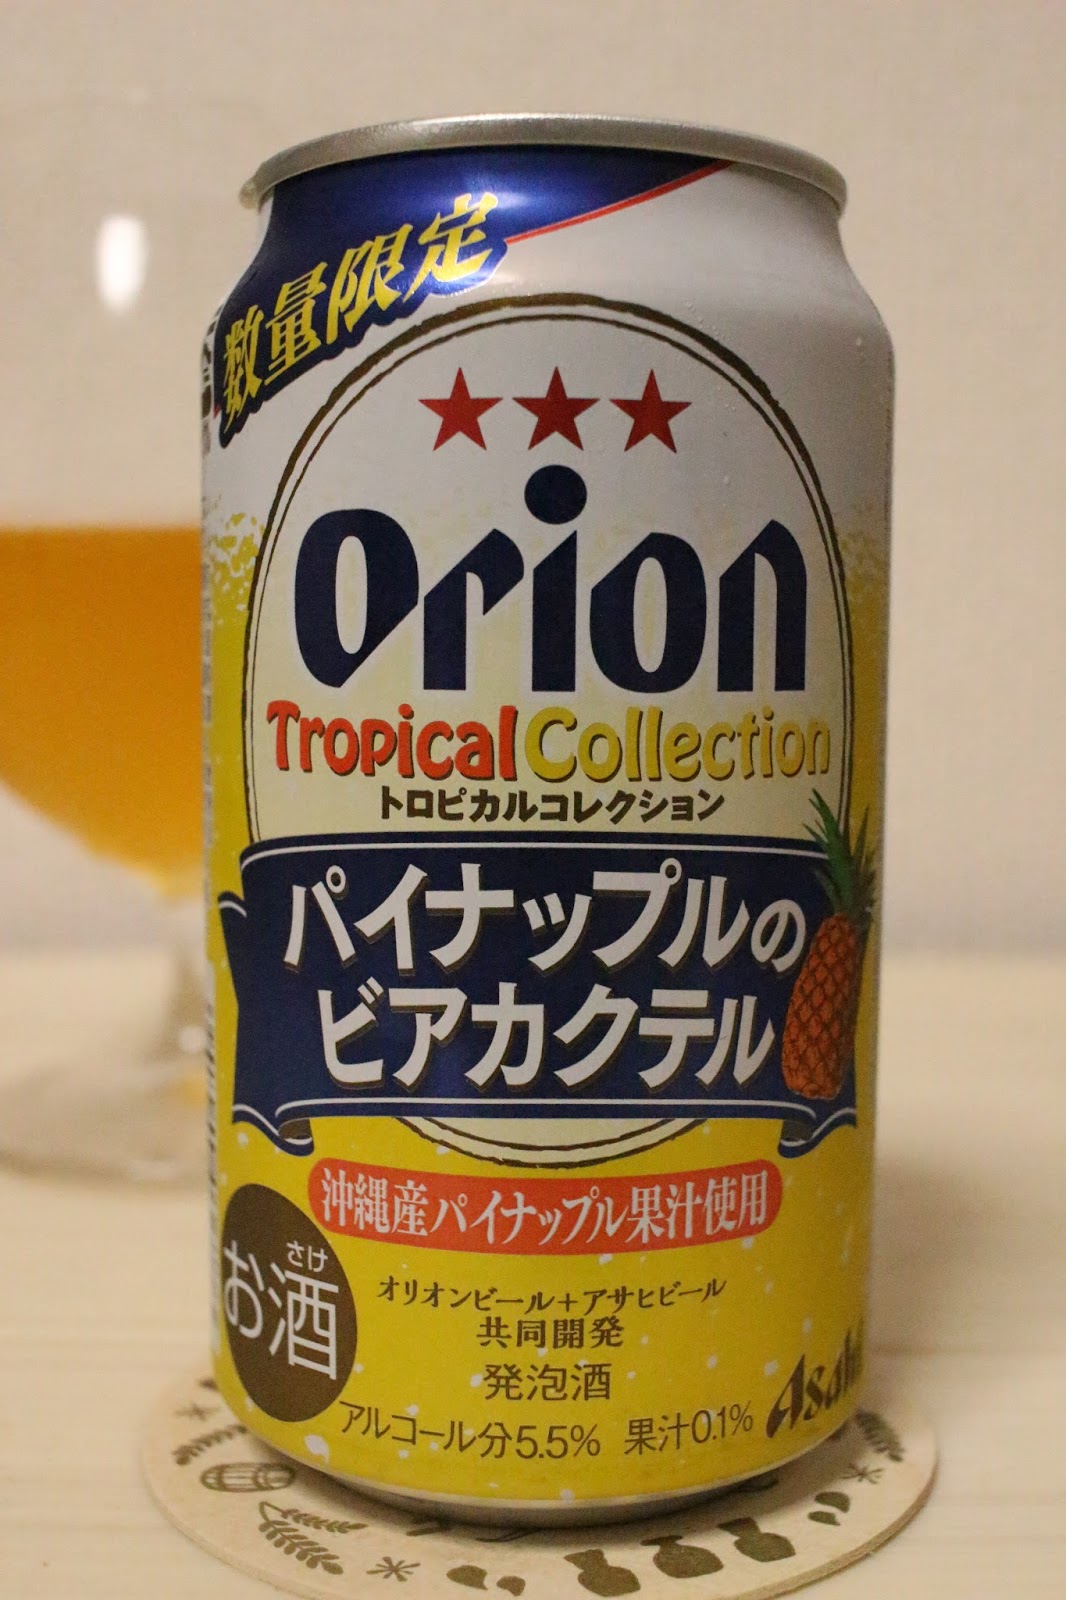 Orion Beer Tropical Collection Pineapple オリオンビール パイナップルのビアカクテル 缶 ビール 定点感想 レビュー びーるのみたい